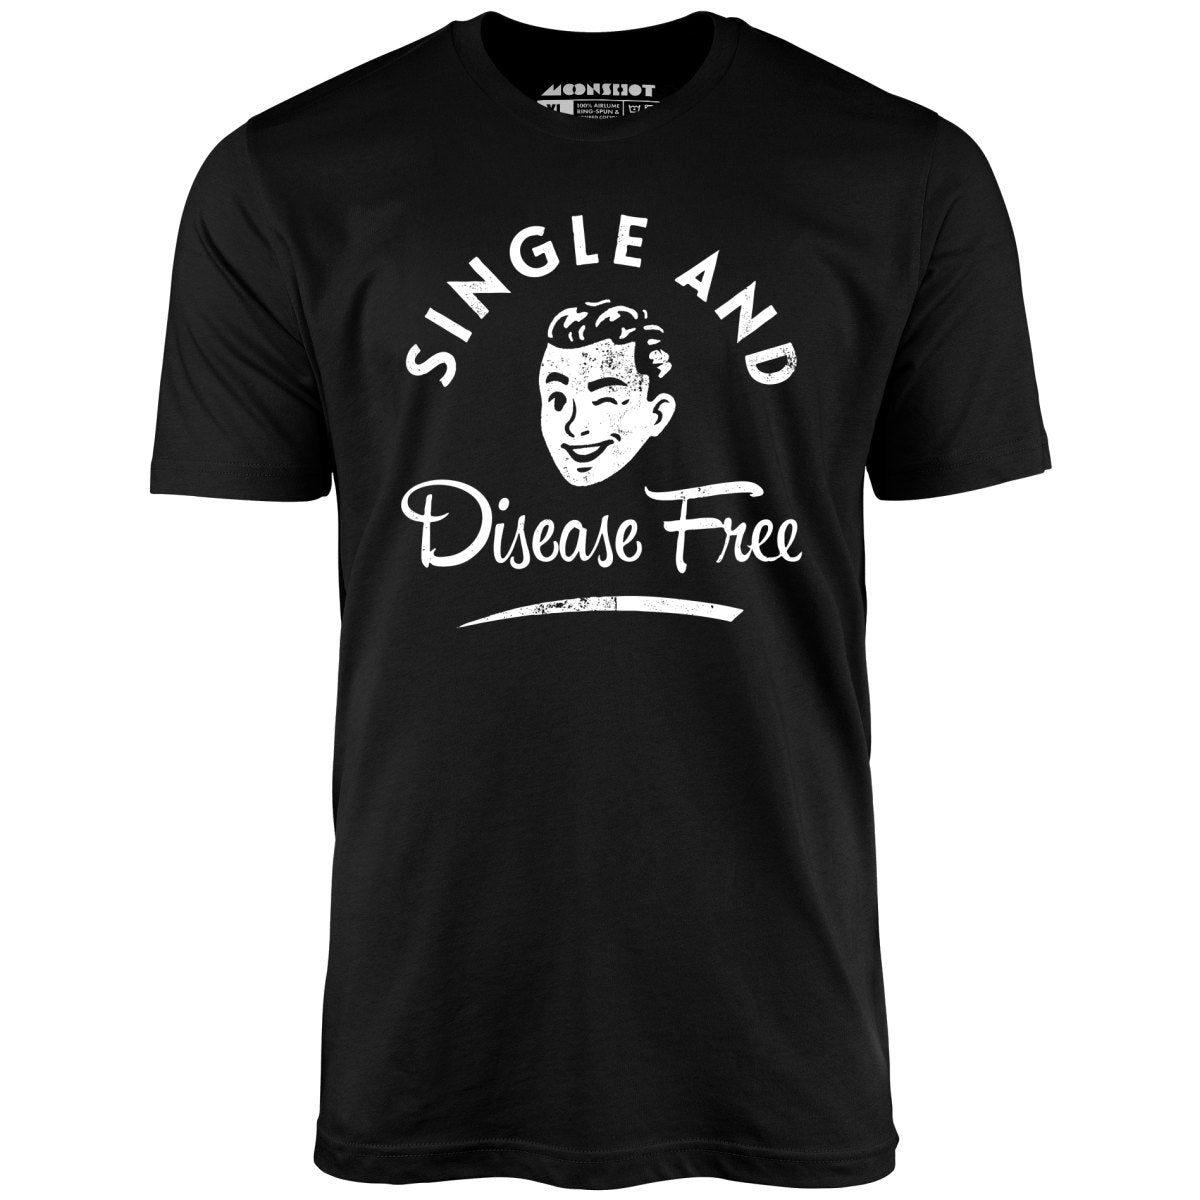 Single and Disease Free - Unisex T-Shirt